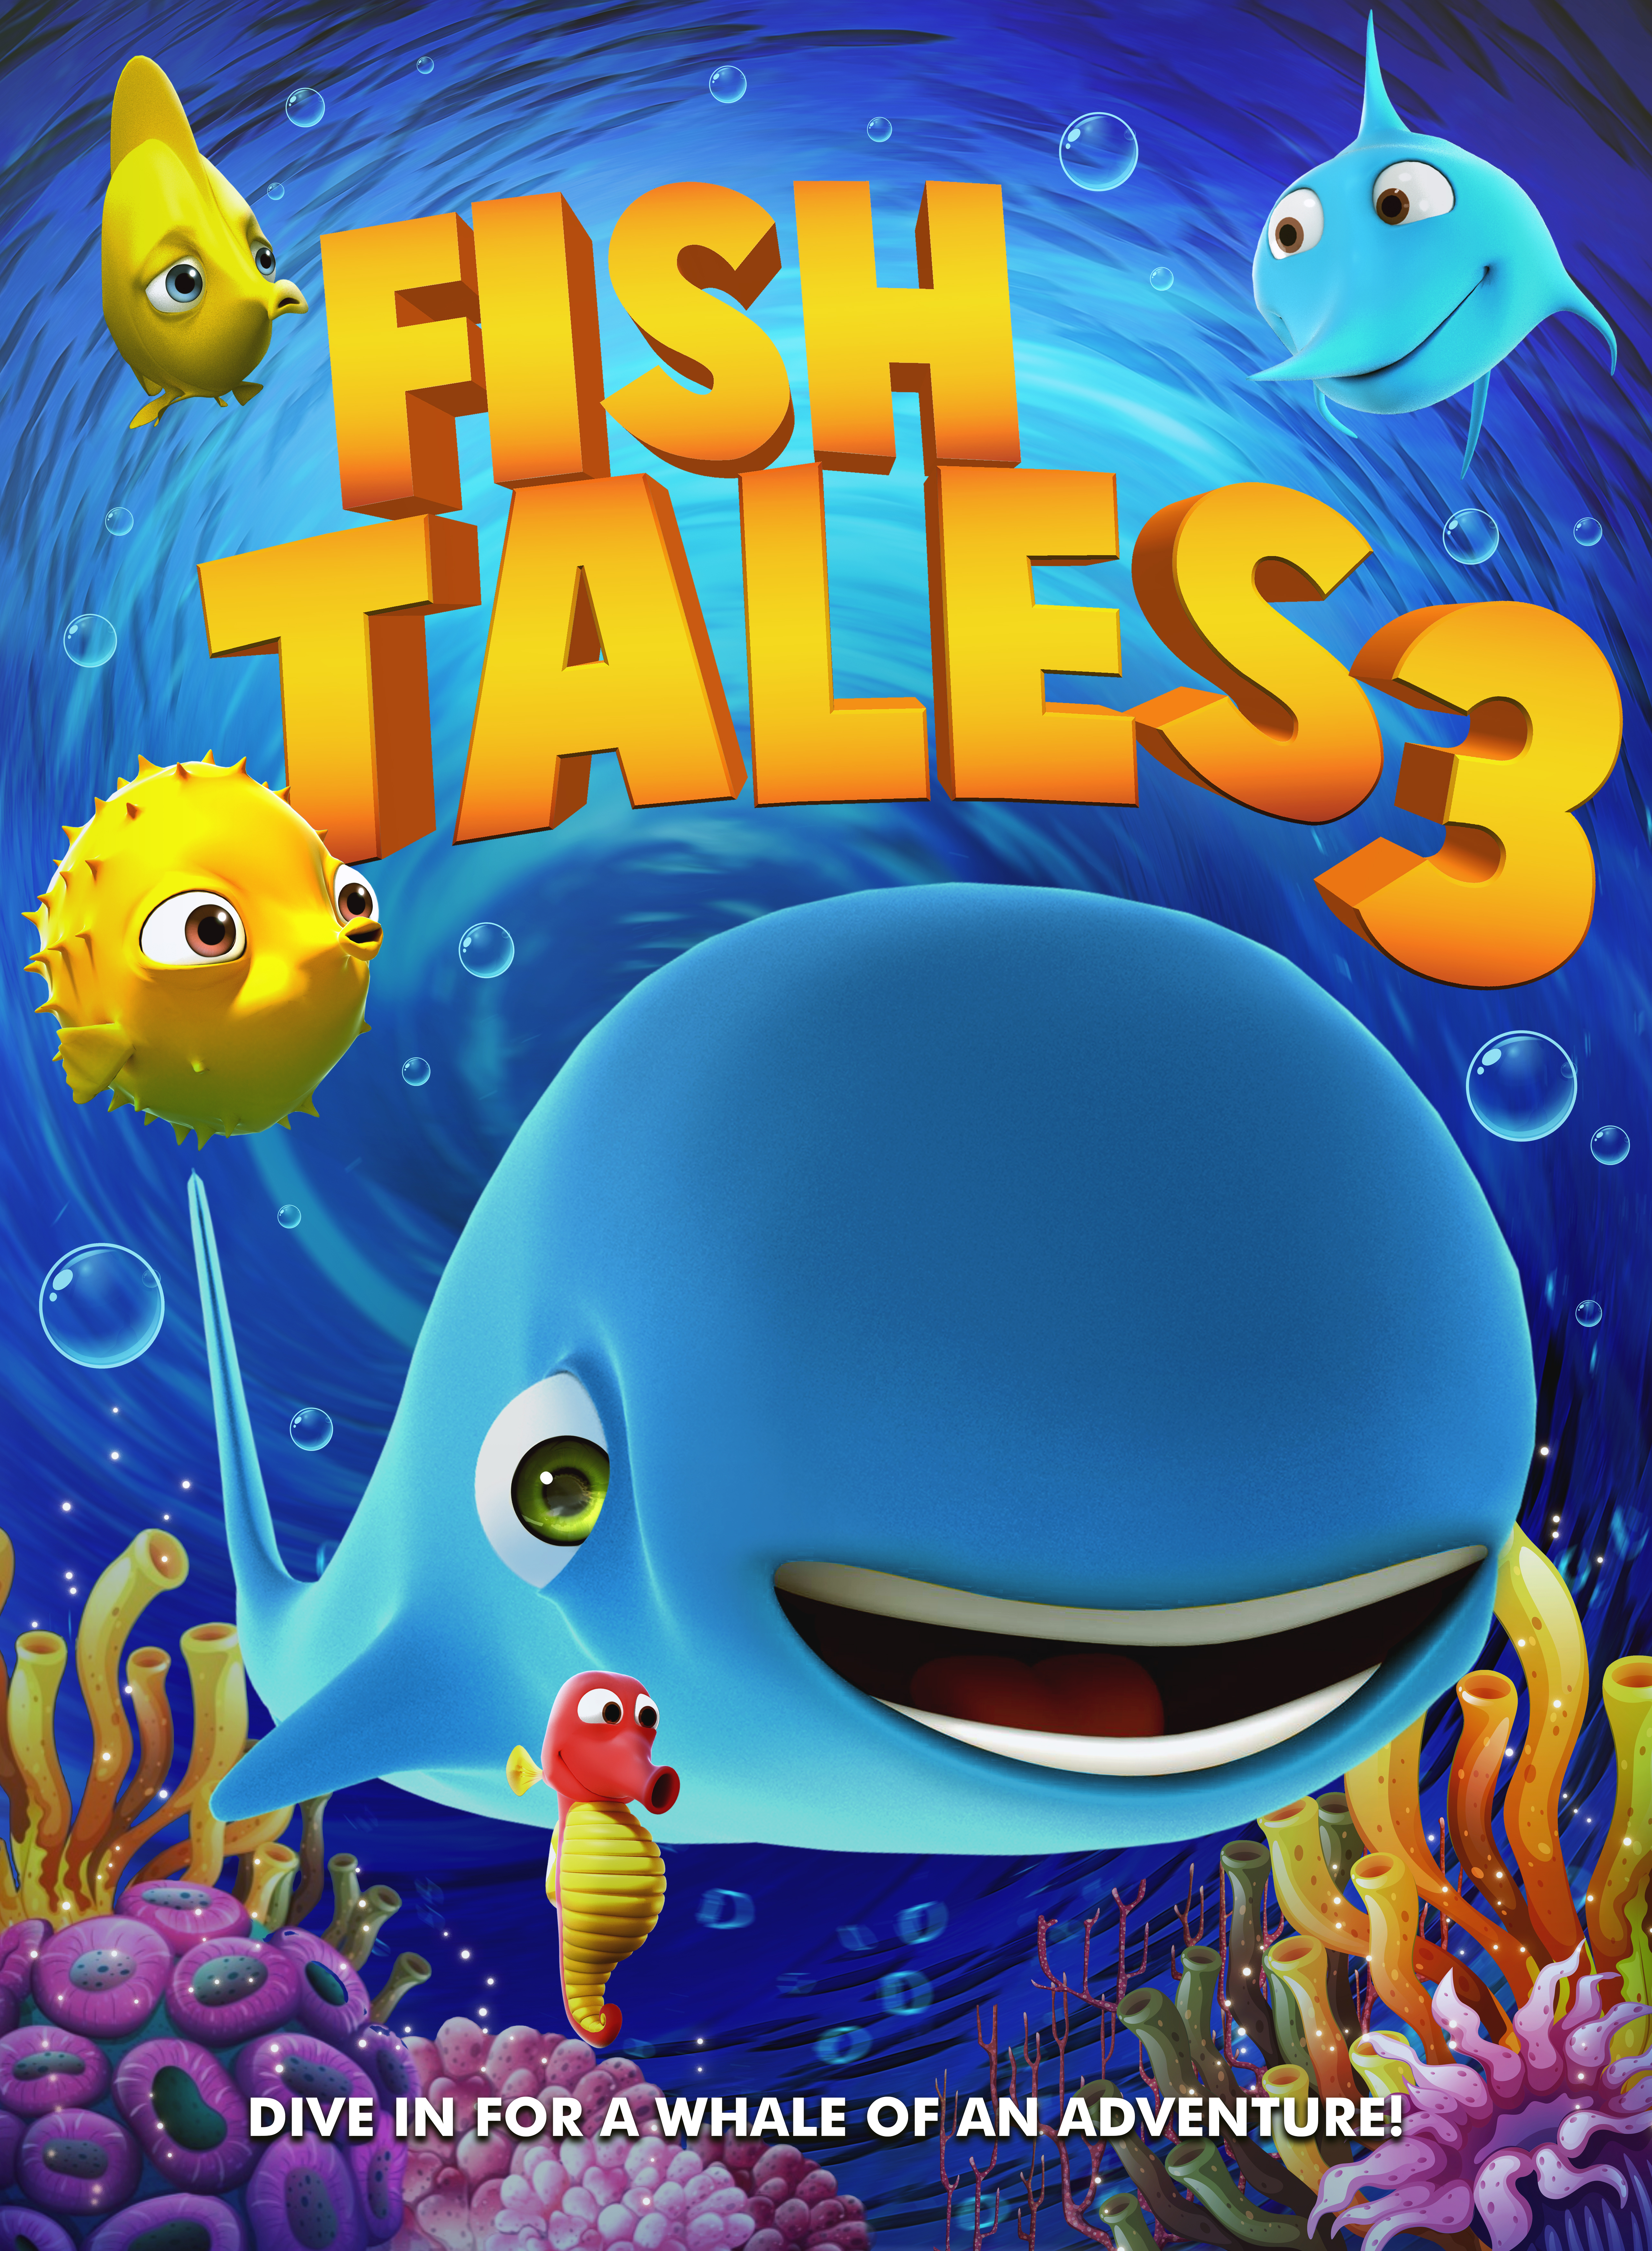 Nonton film Fishtales 3 layarkaca21 indoxx1 ganool online streaming terbaru